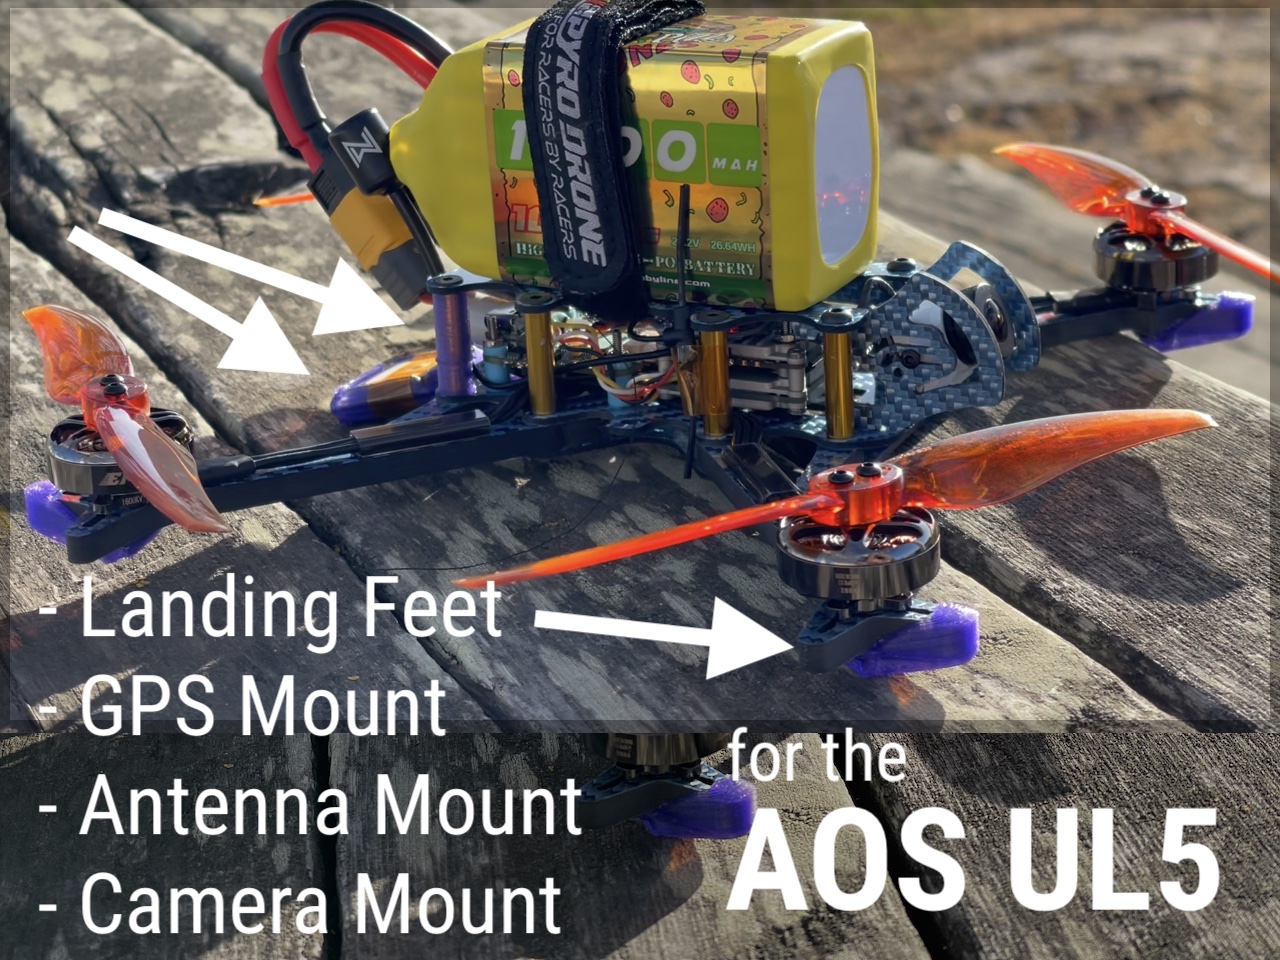 AOS UL5 Parts: GPS + Antenna mounts, landing feet skids arm protectors